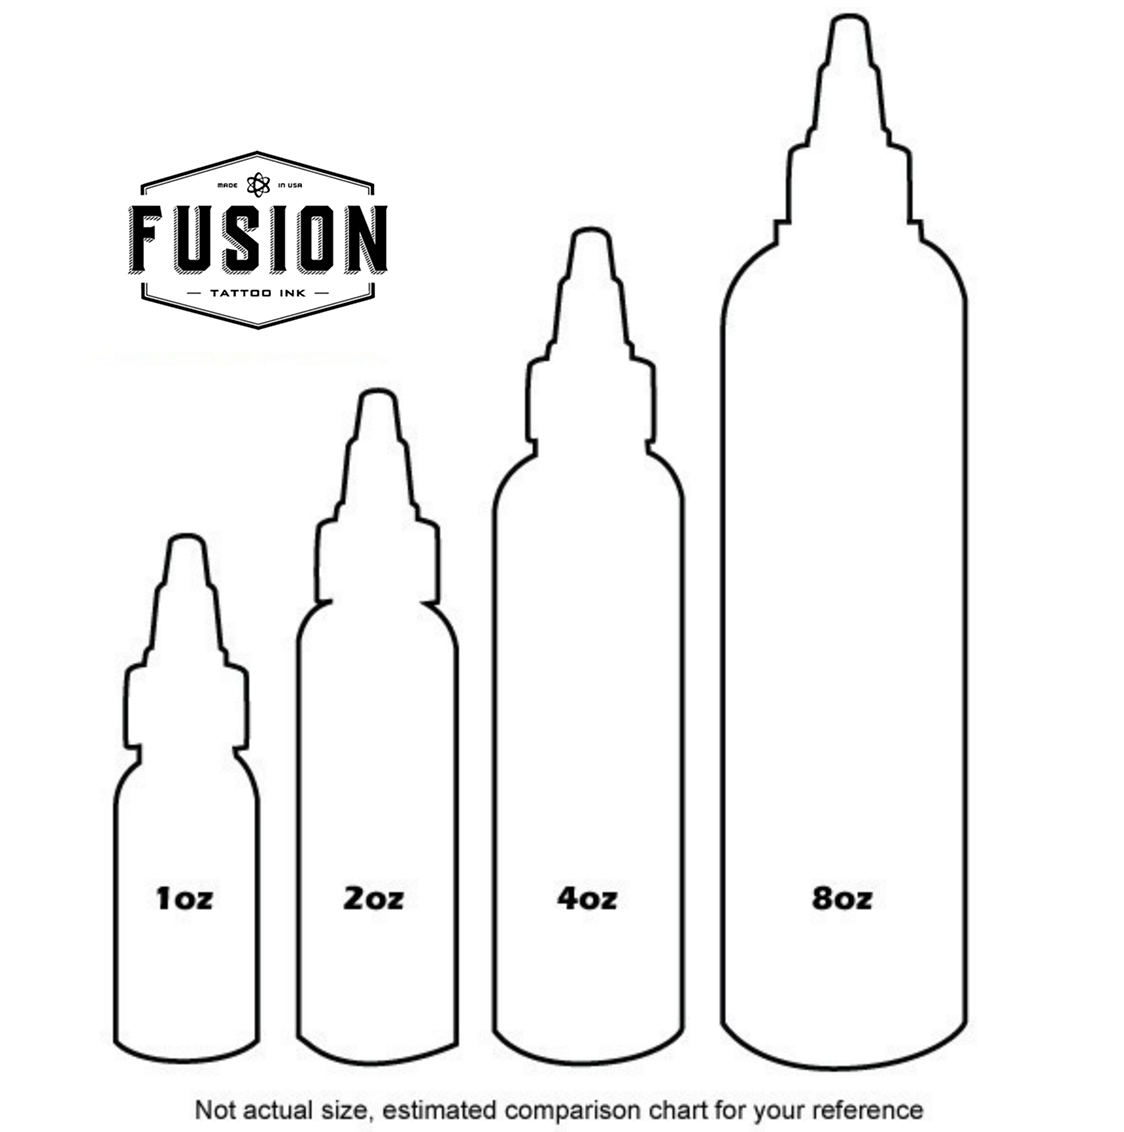 Bottle Size Chart